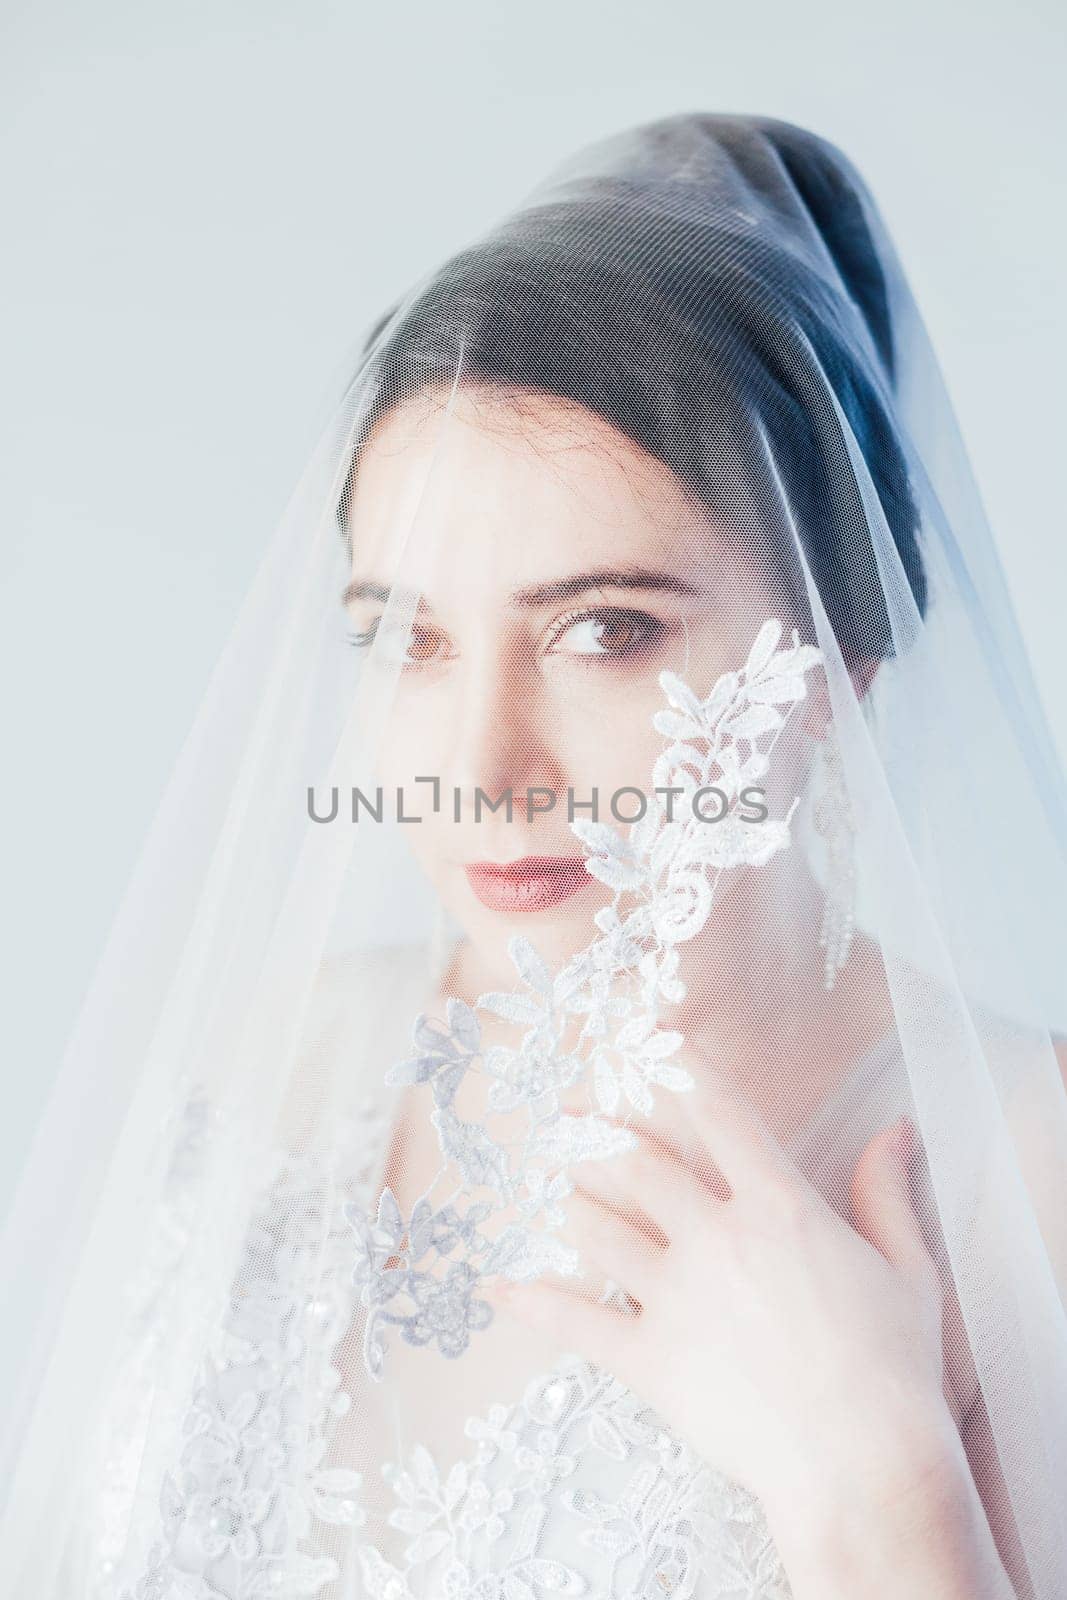 Portrait of a bride in a wedding dress by Simakov